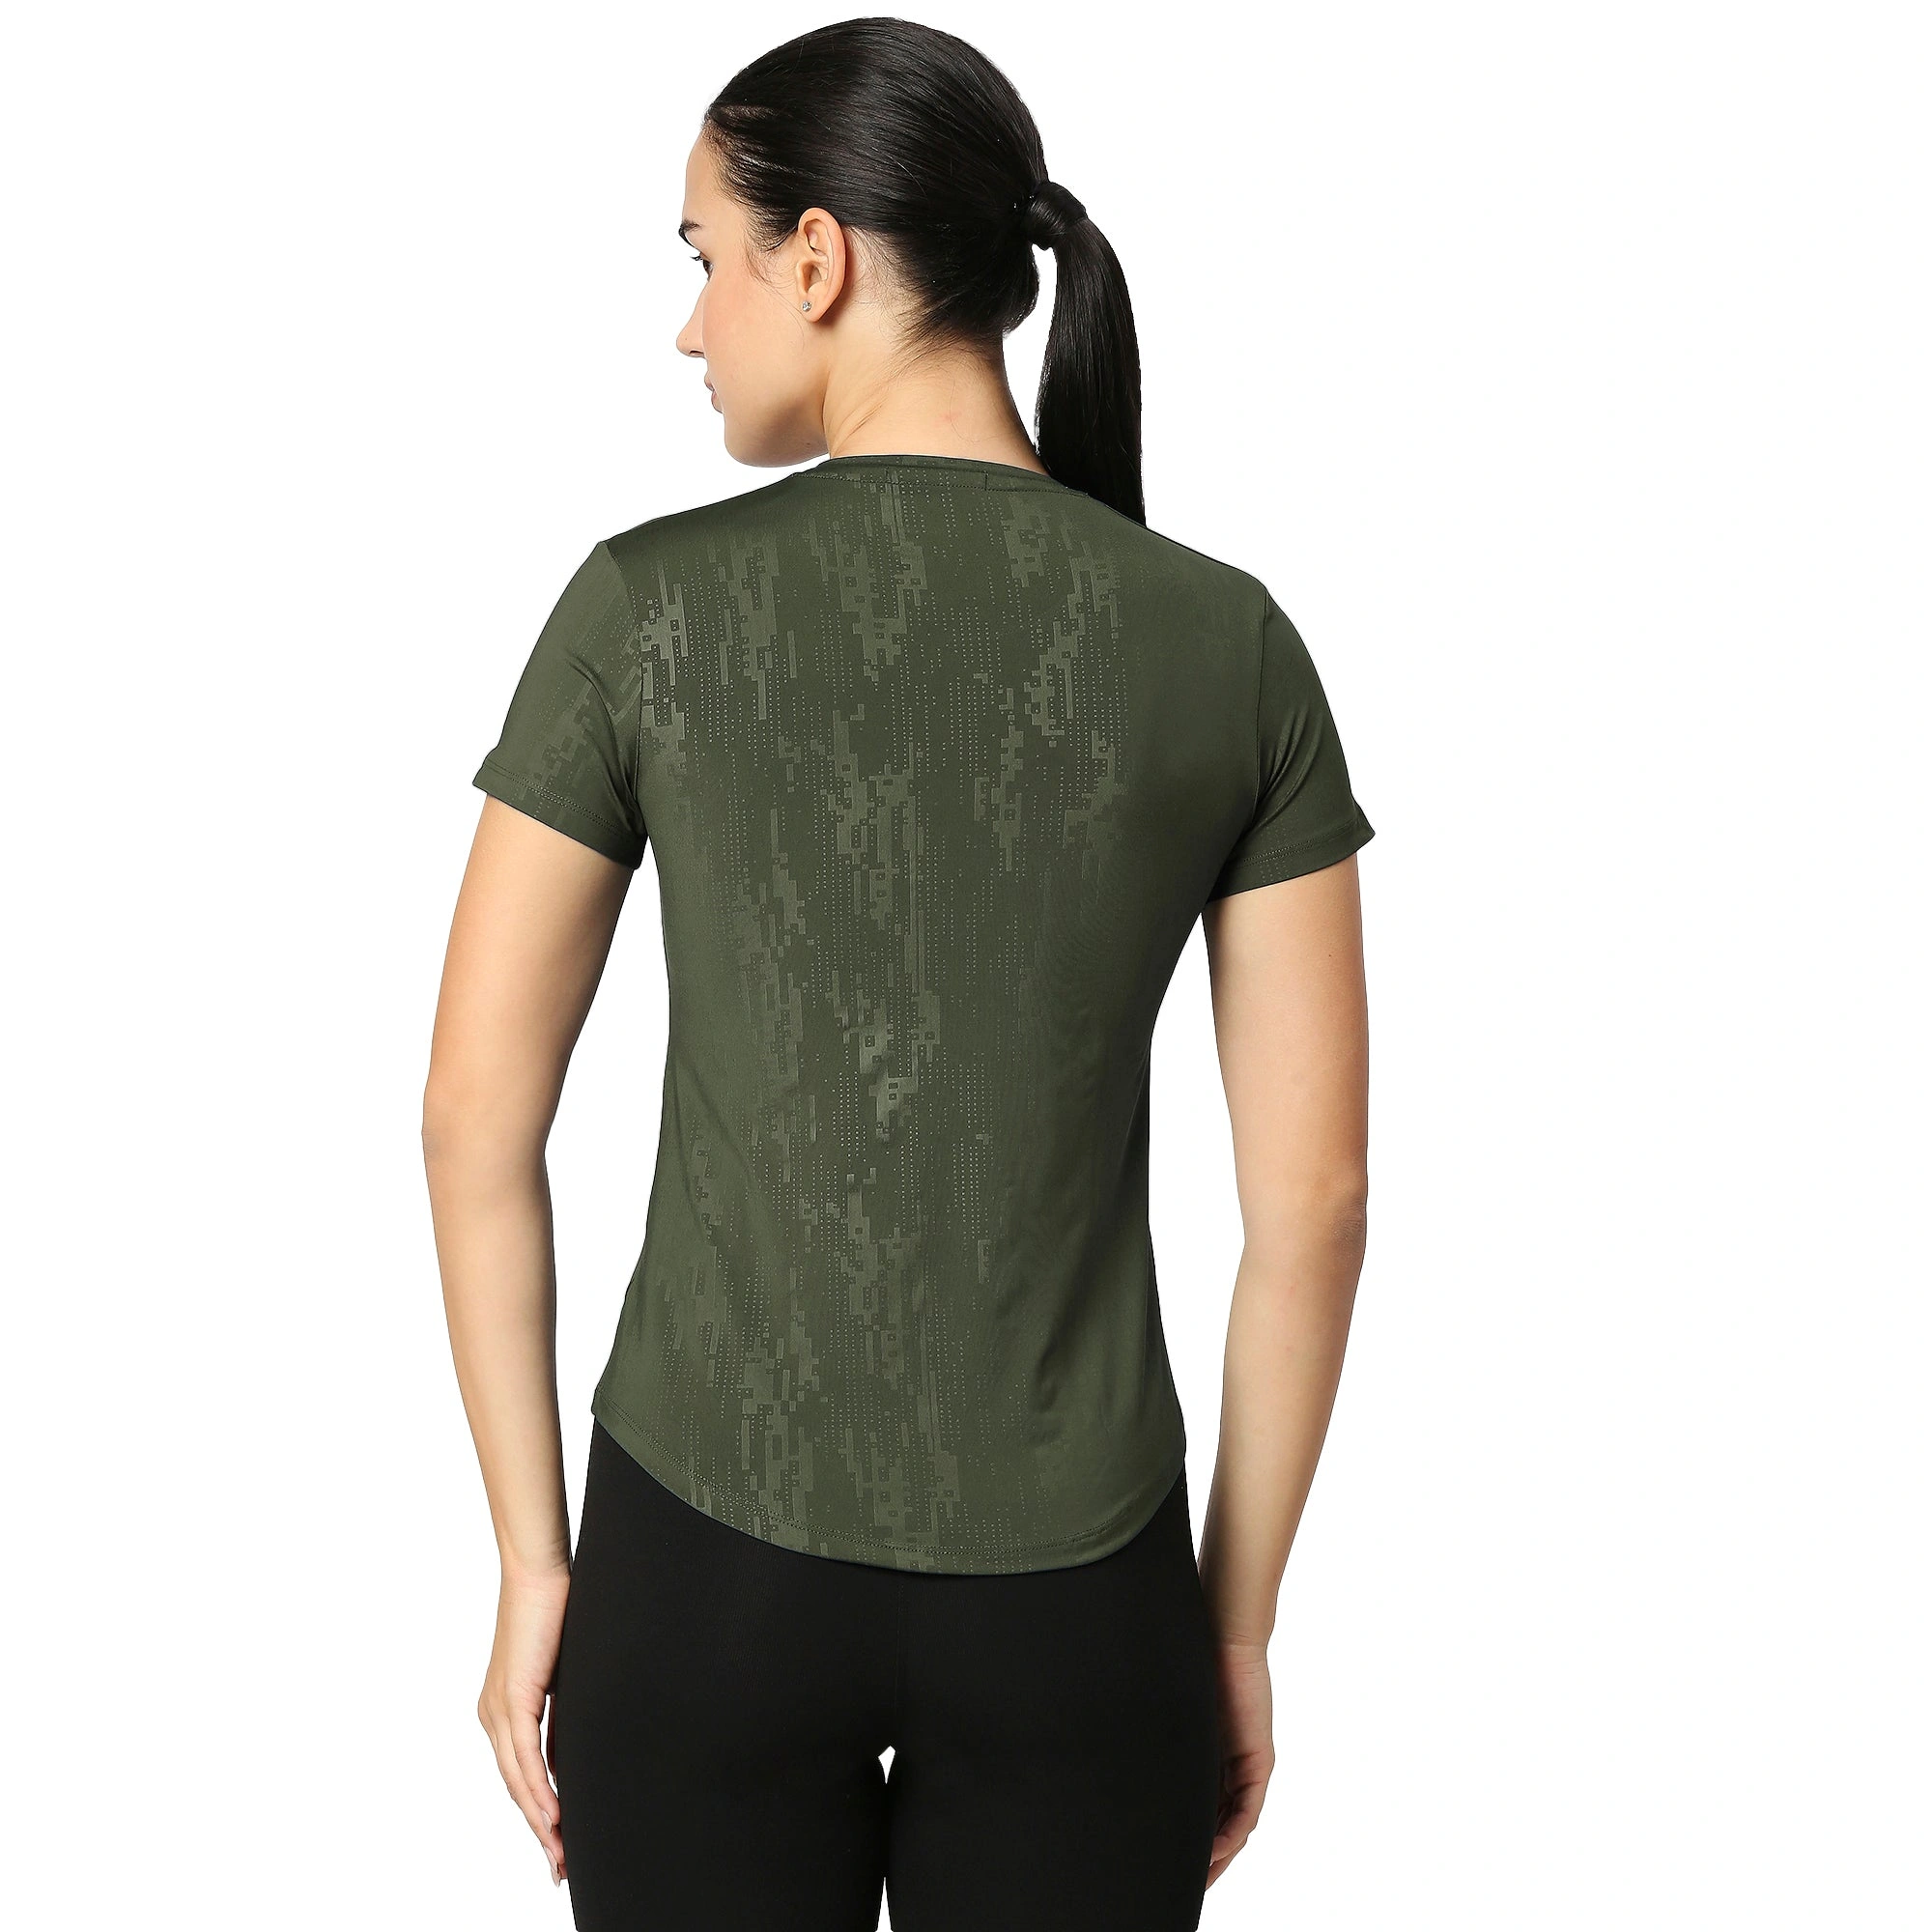 Curved Hem Emboss Print Gym Workout T-Shirt -OLIVE GREEN-M-3